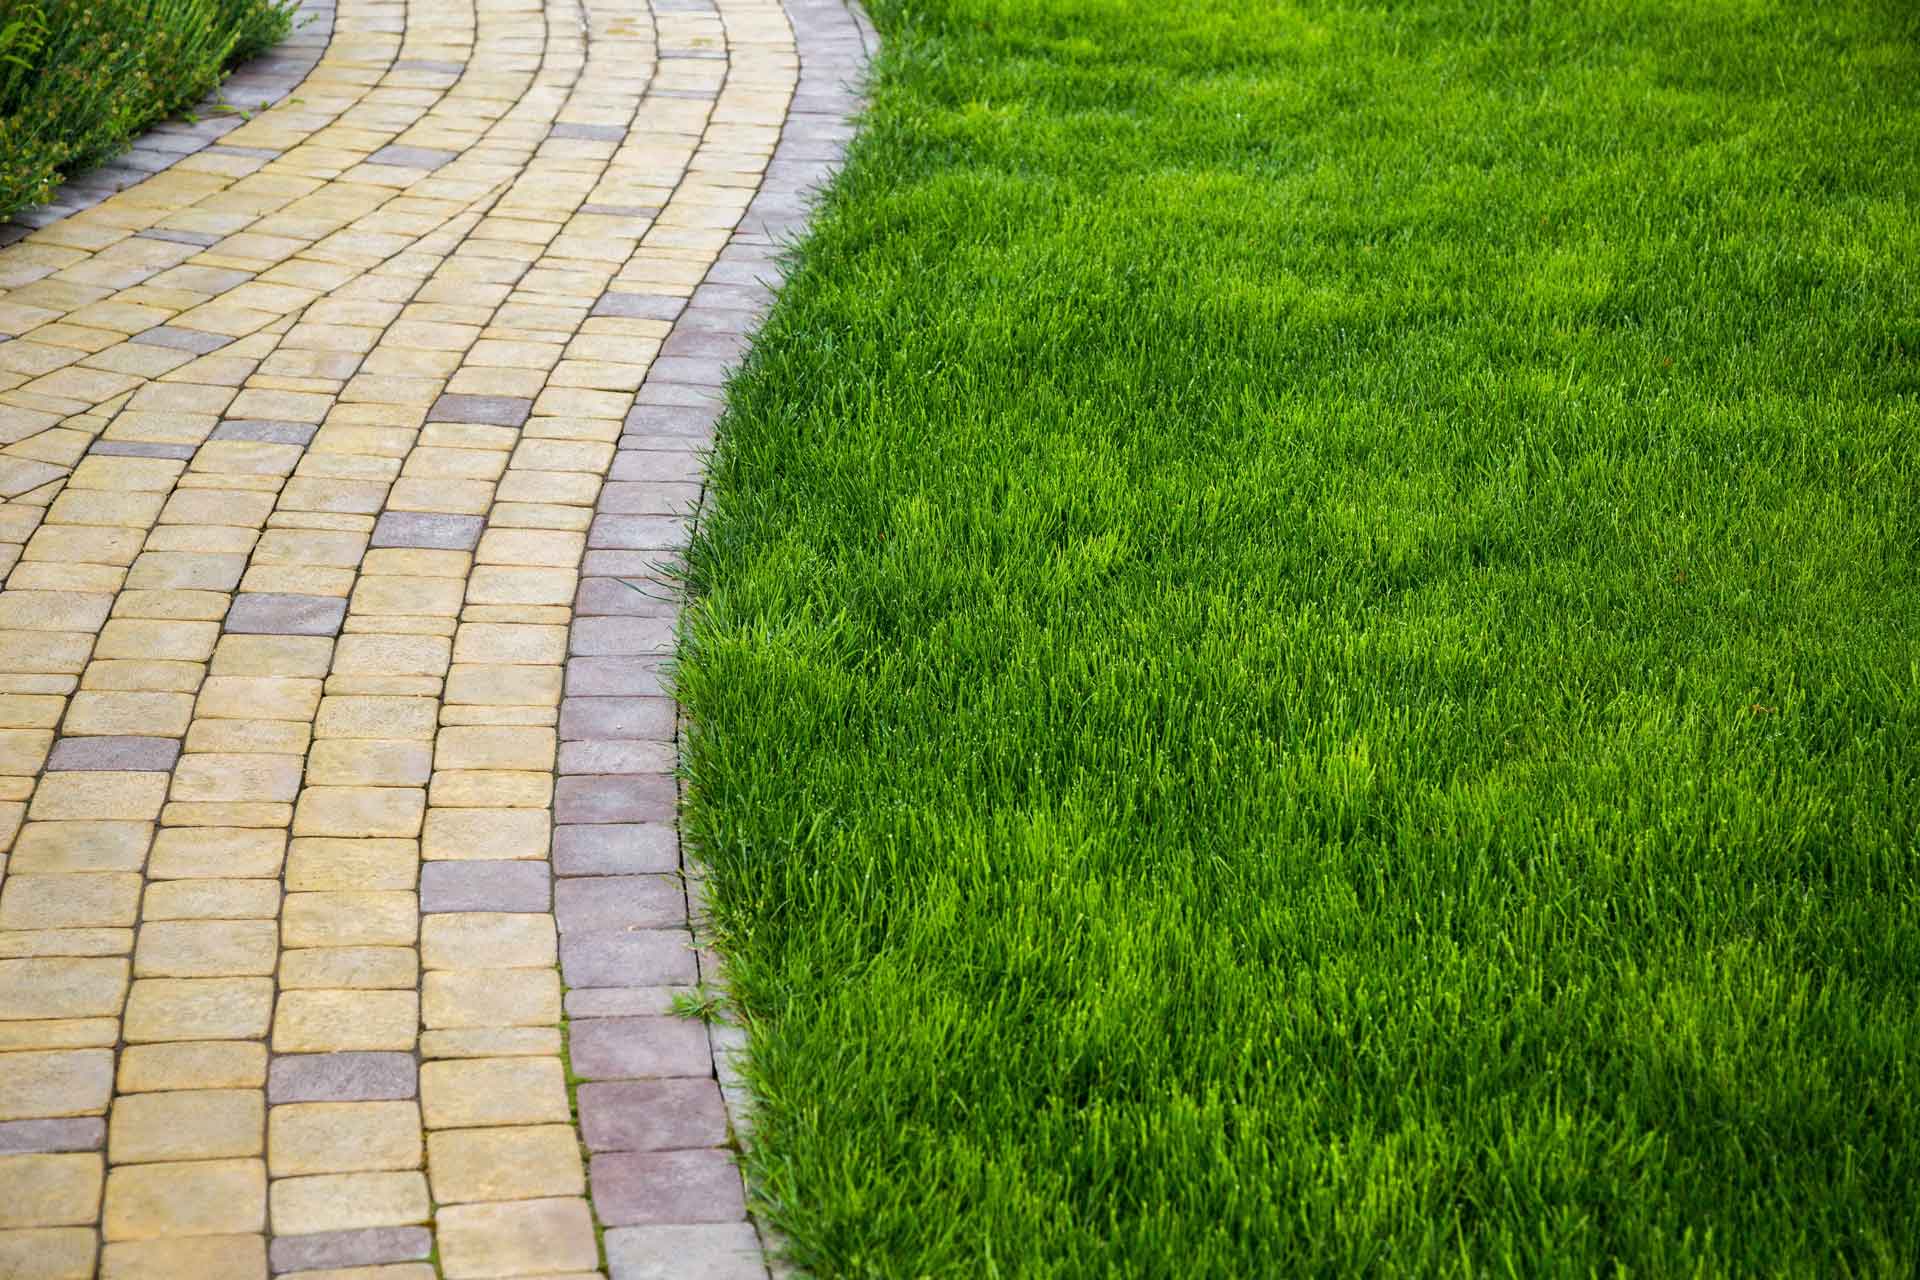 Brick path winding through green lawn